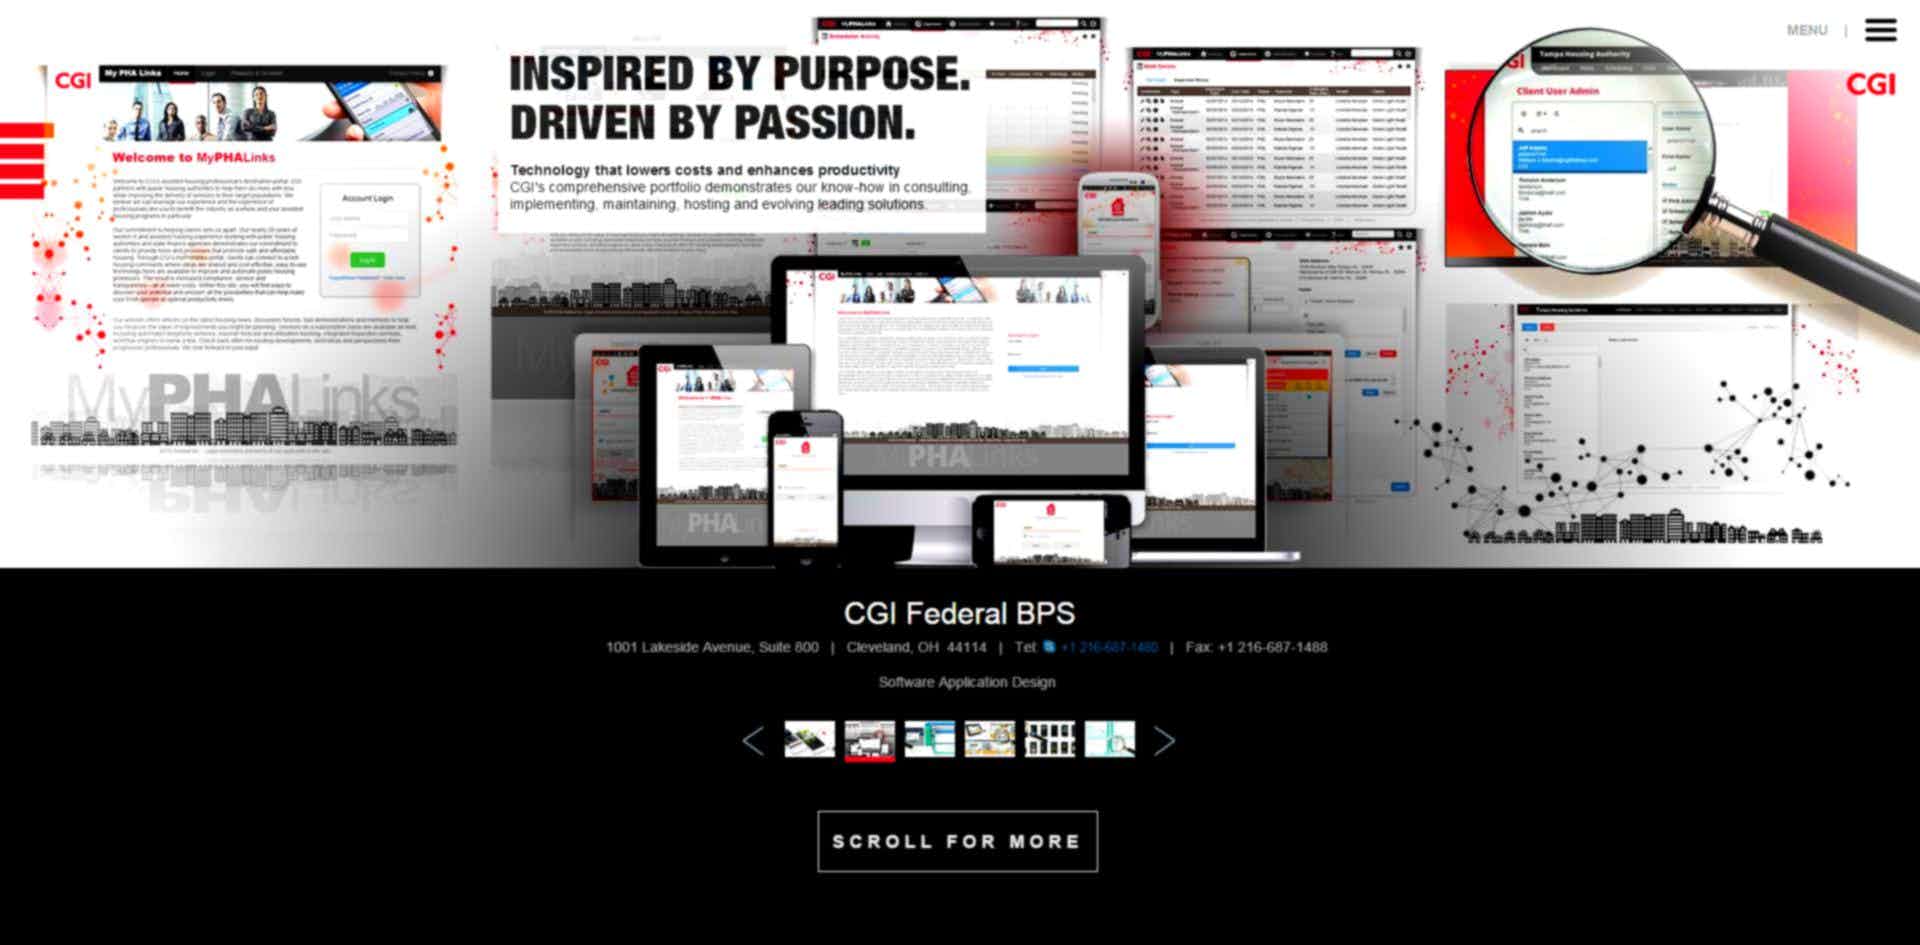 CGI's Business Process Services (BPS) - Website Design